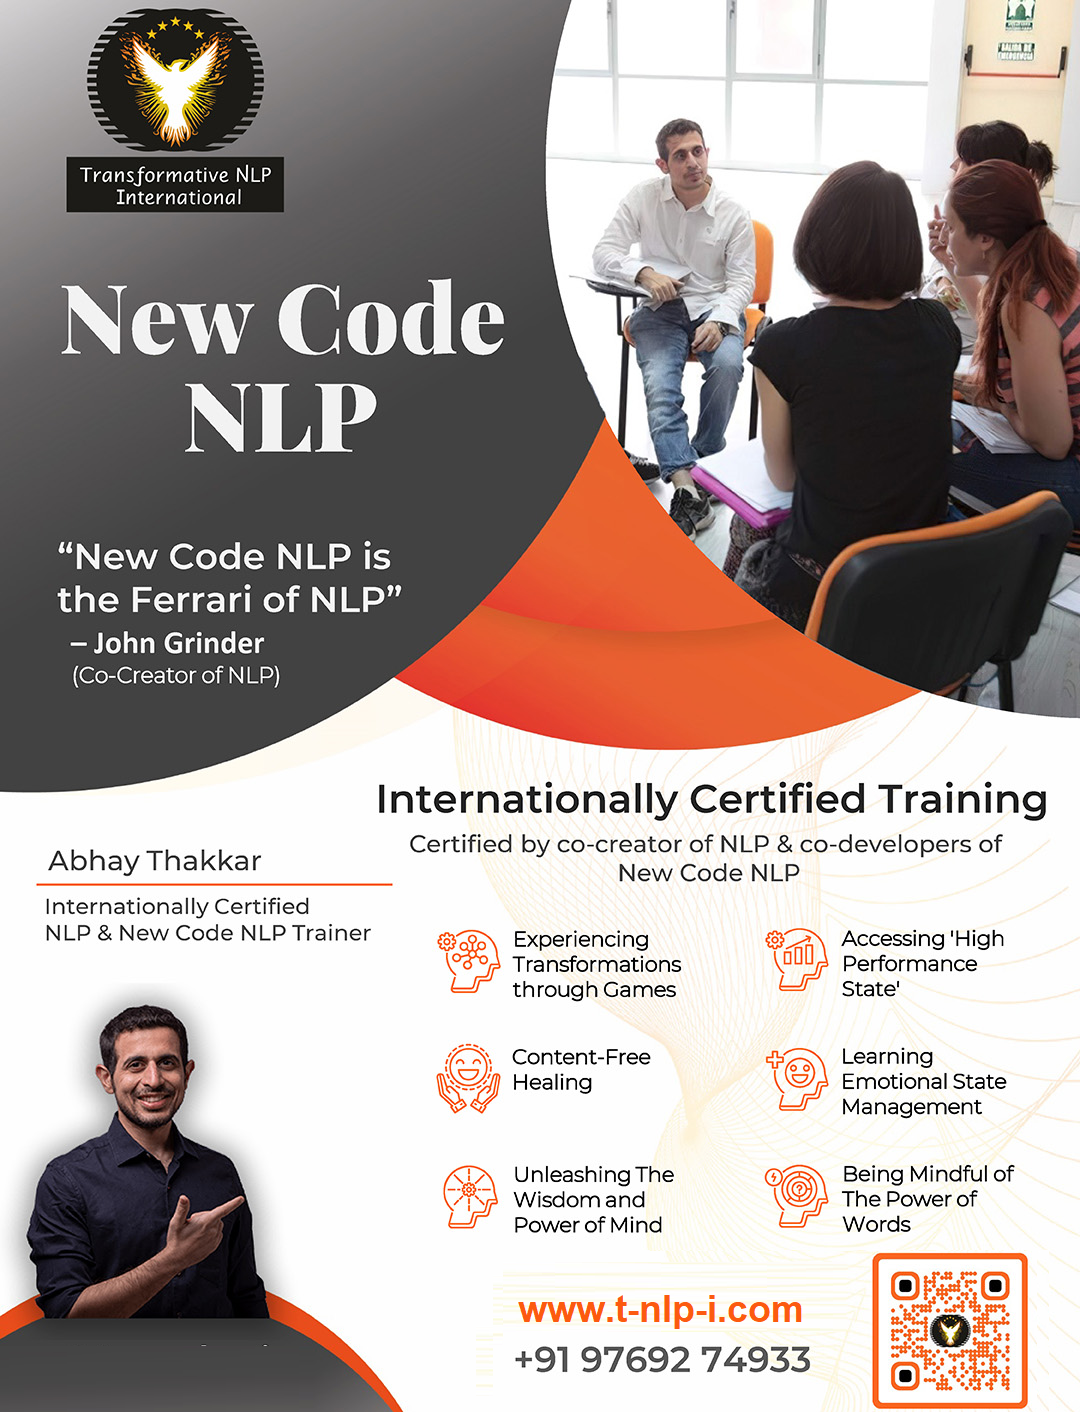 Internationally Certified New Code NLP Training by Abhay Thakkar - Melbourne